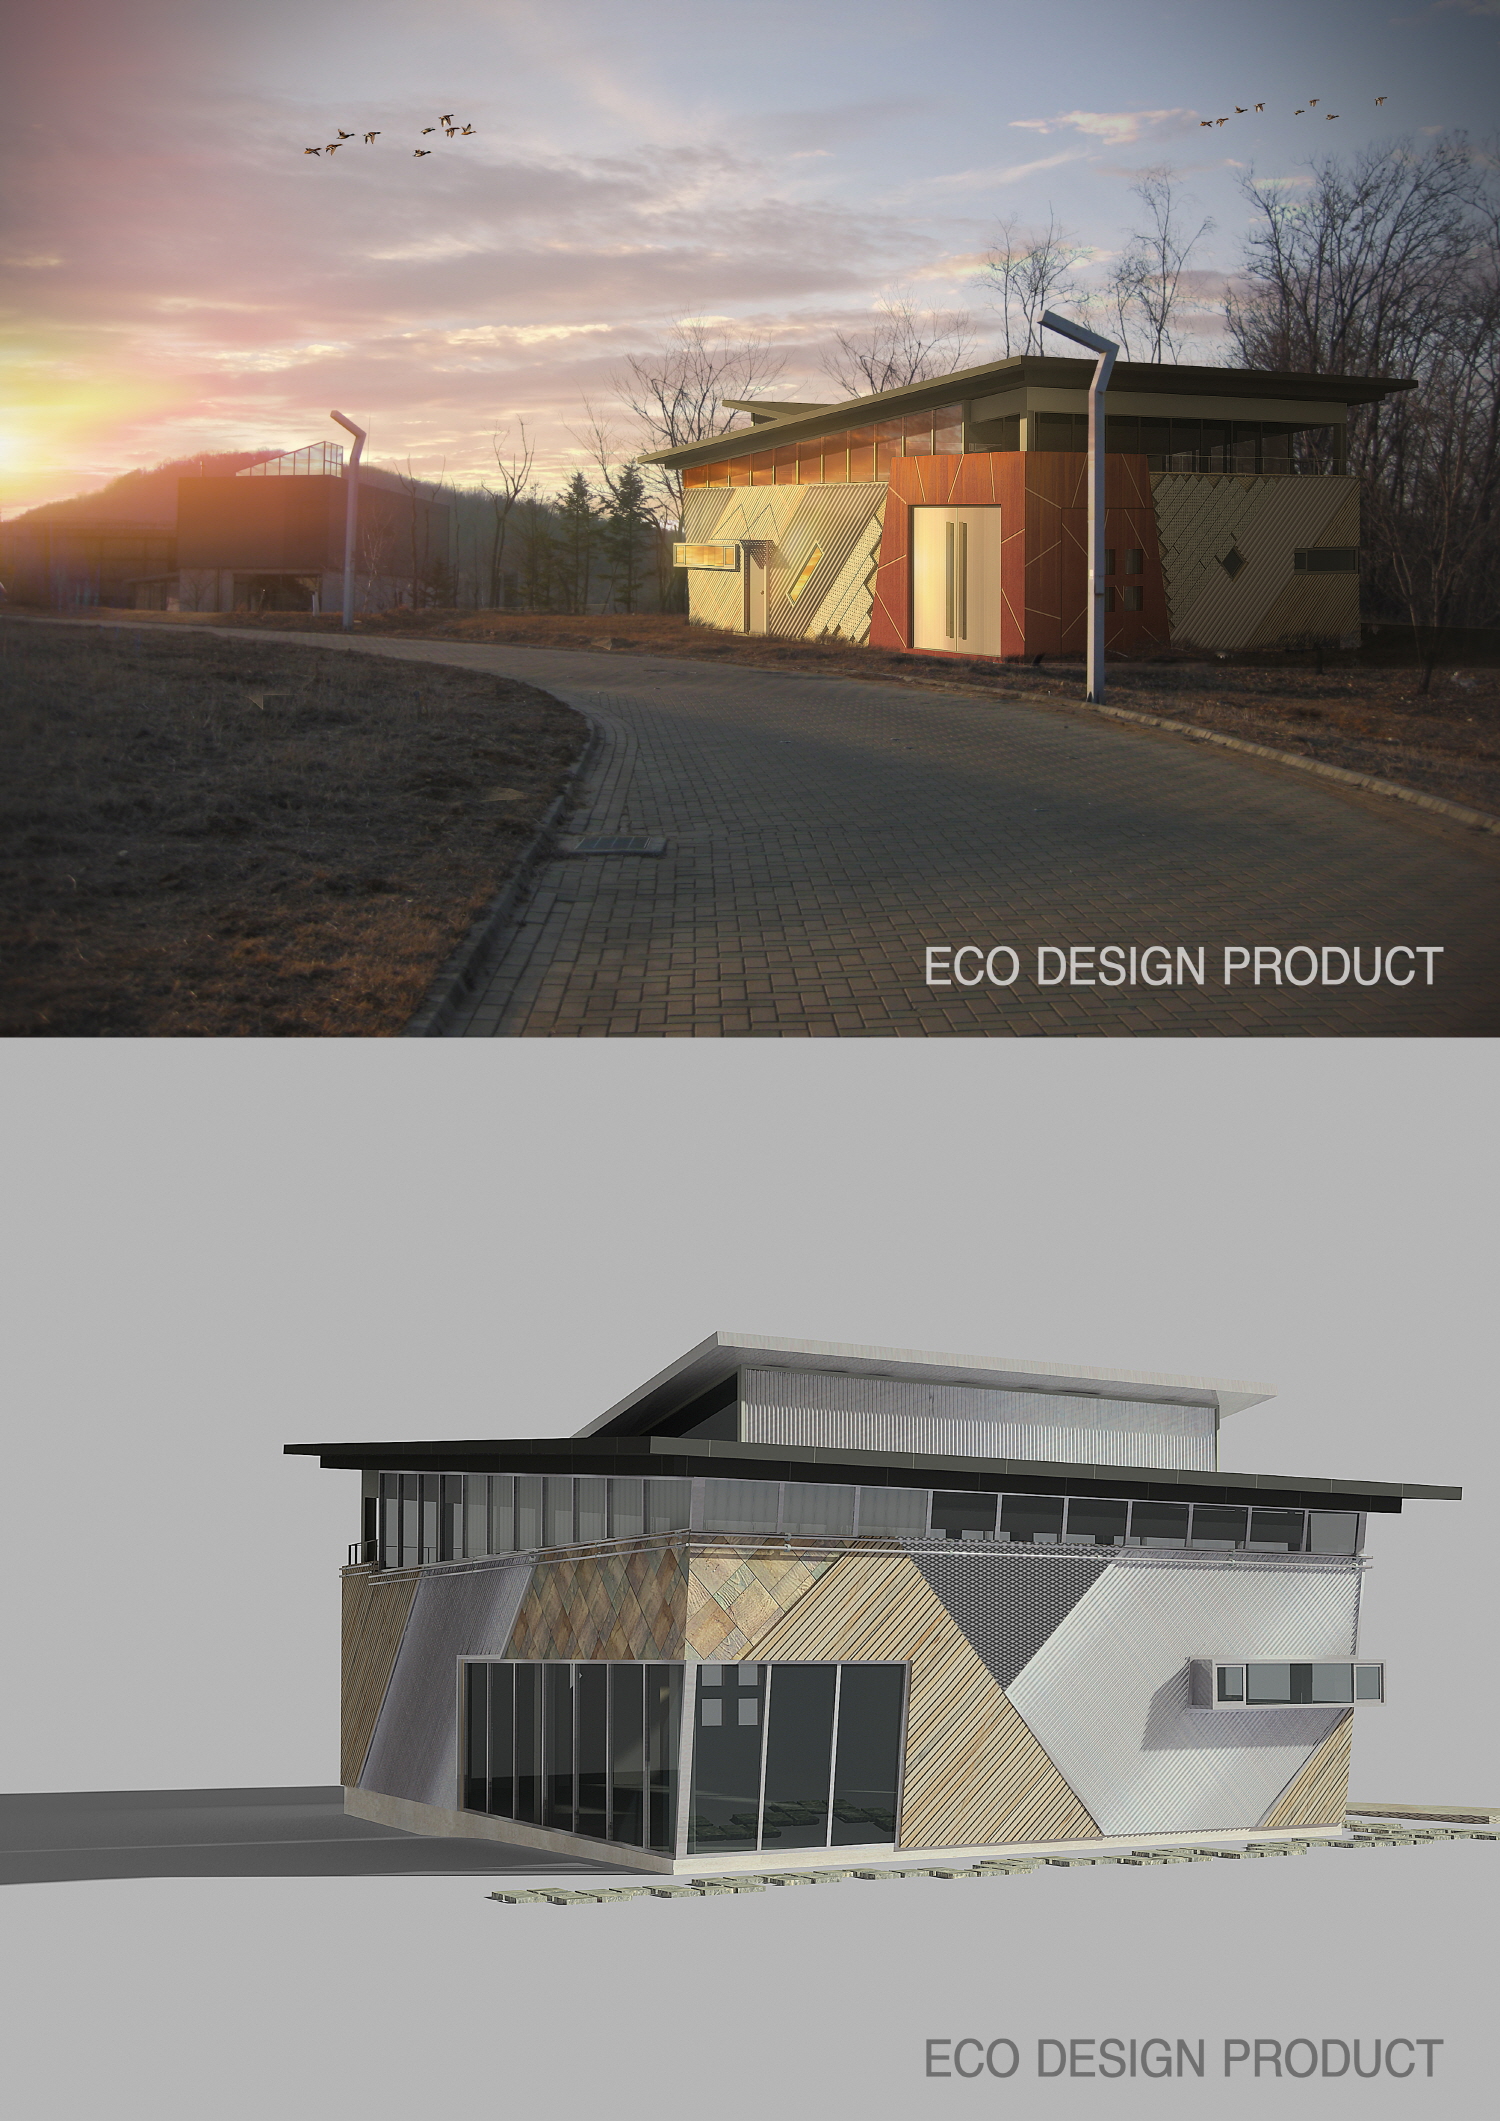 Eco design product